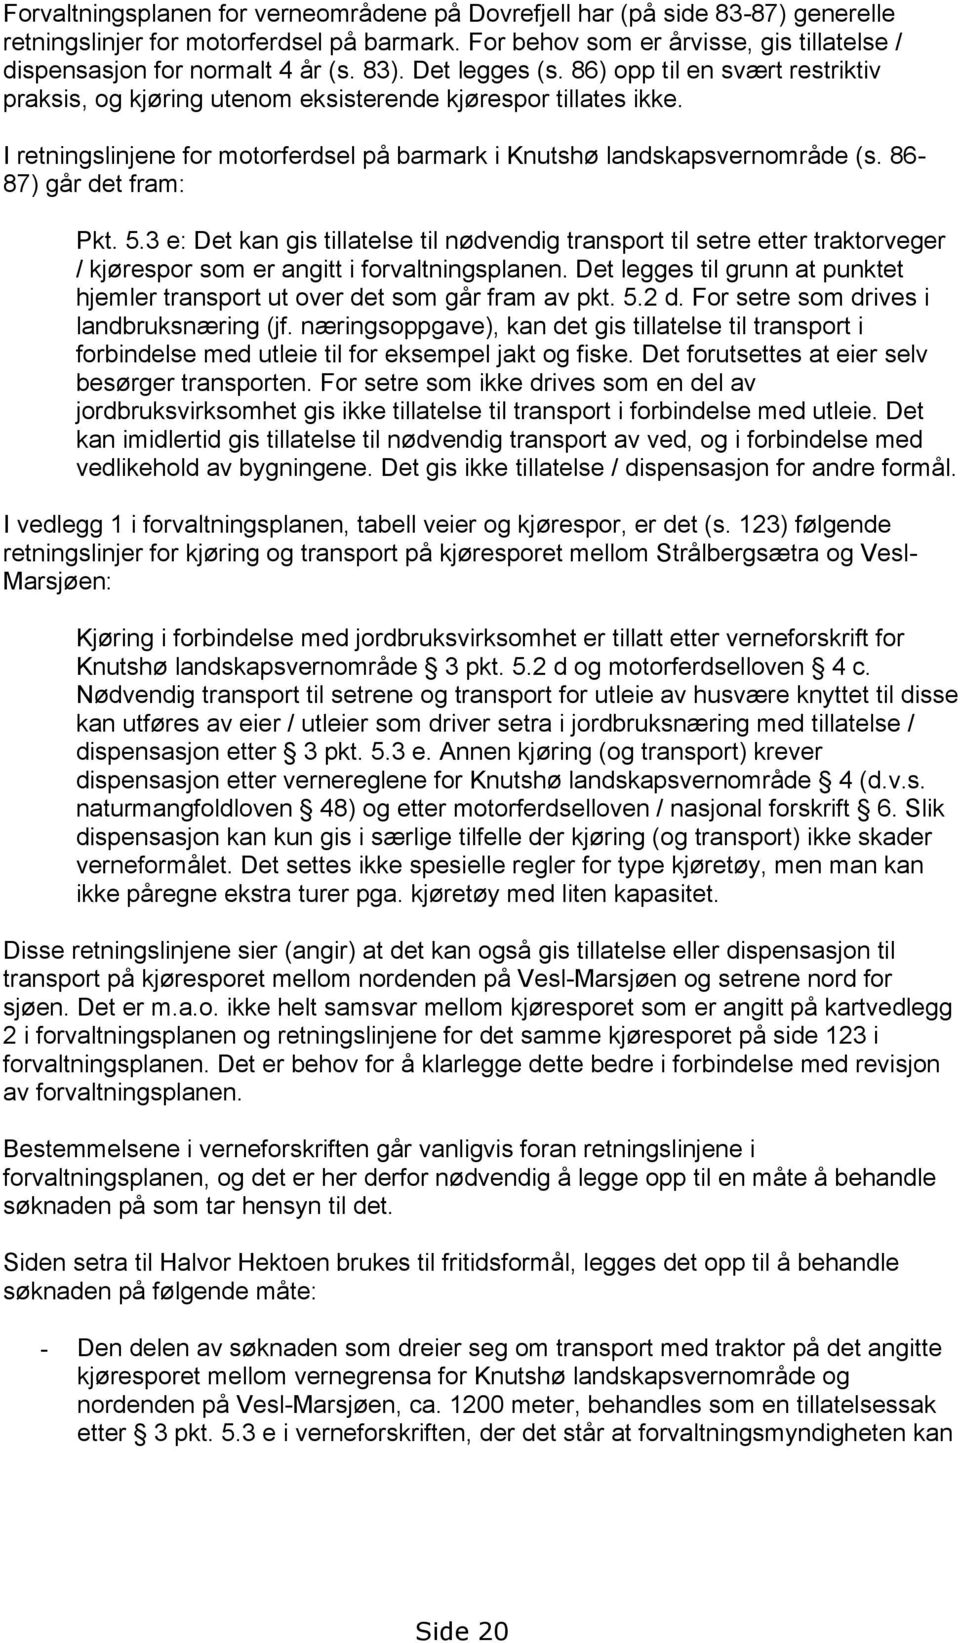 I retningslinjene for motorferdsel på barmark i Knutshø landskapsvernområde (s. 86-87) går det fram: Pkt. 5.